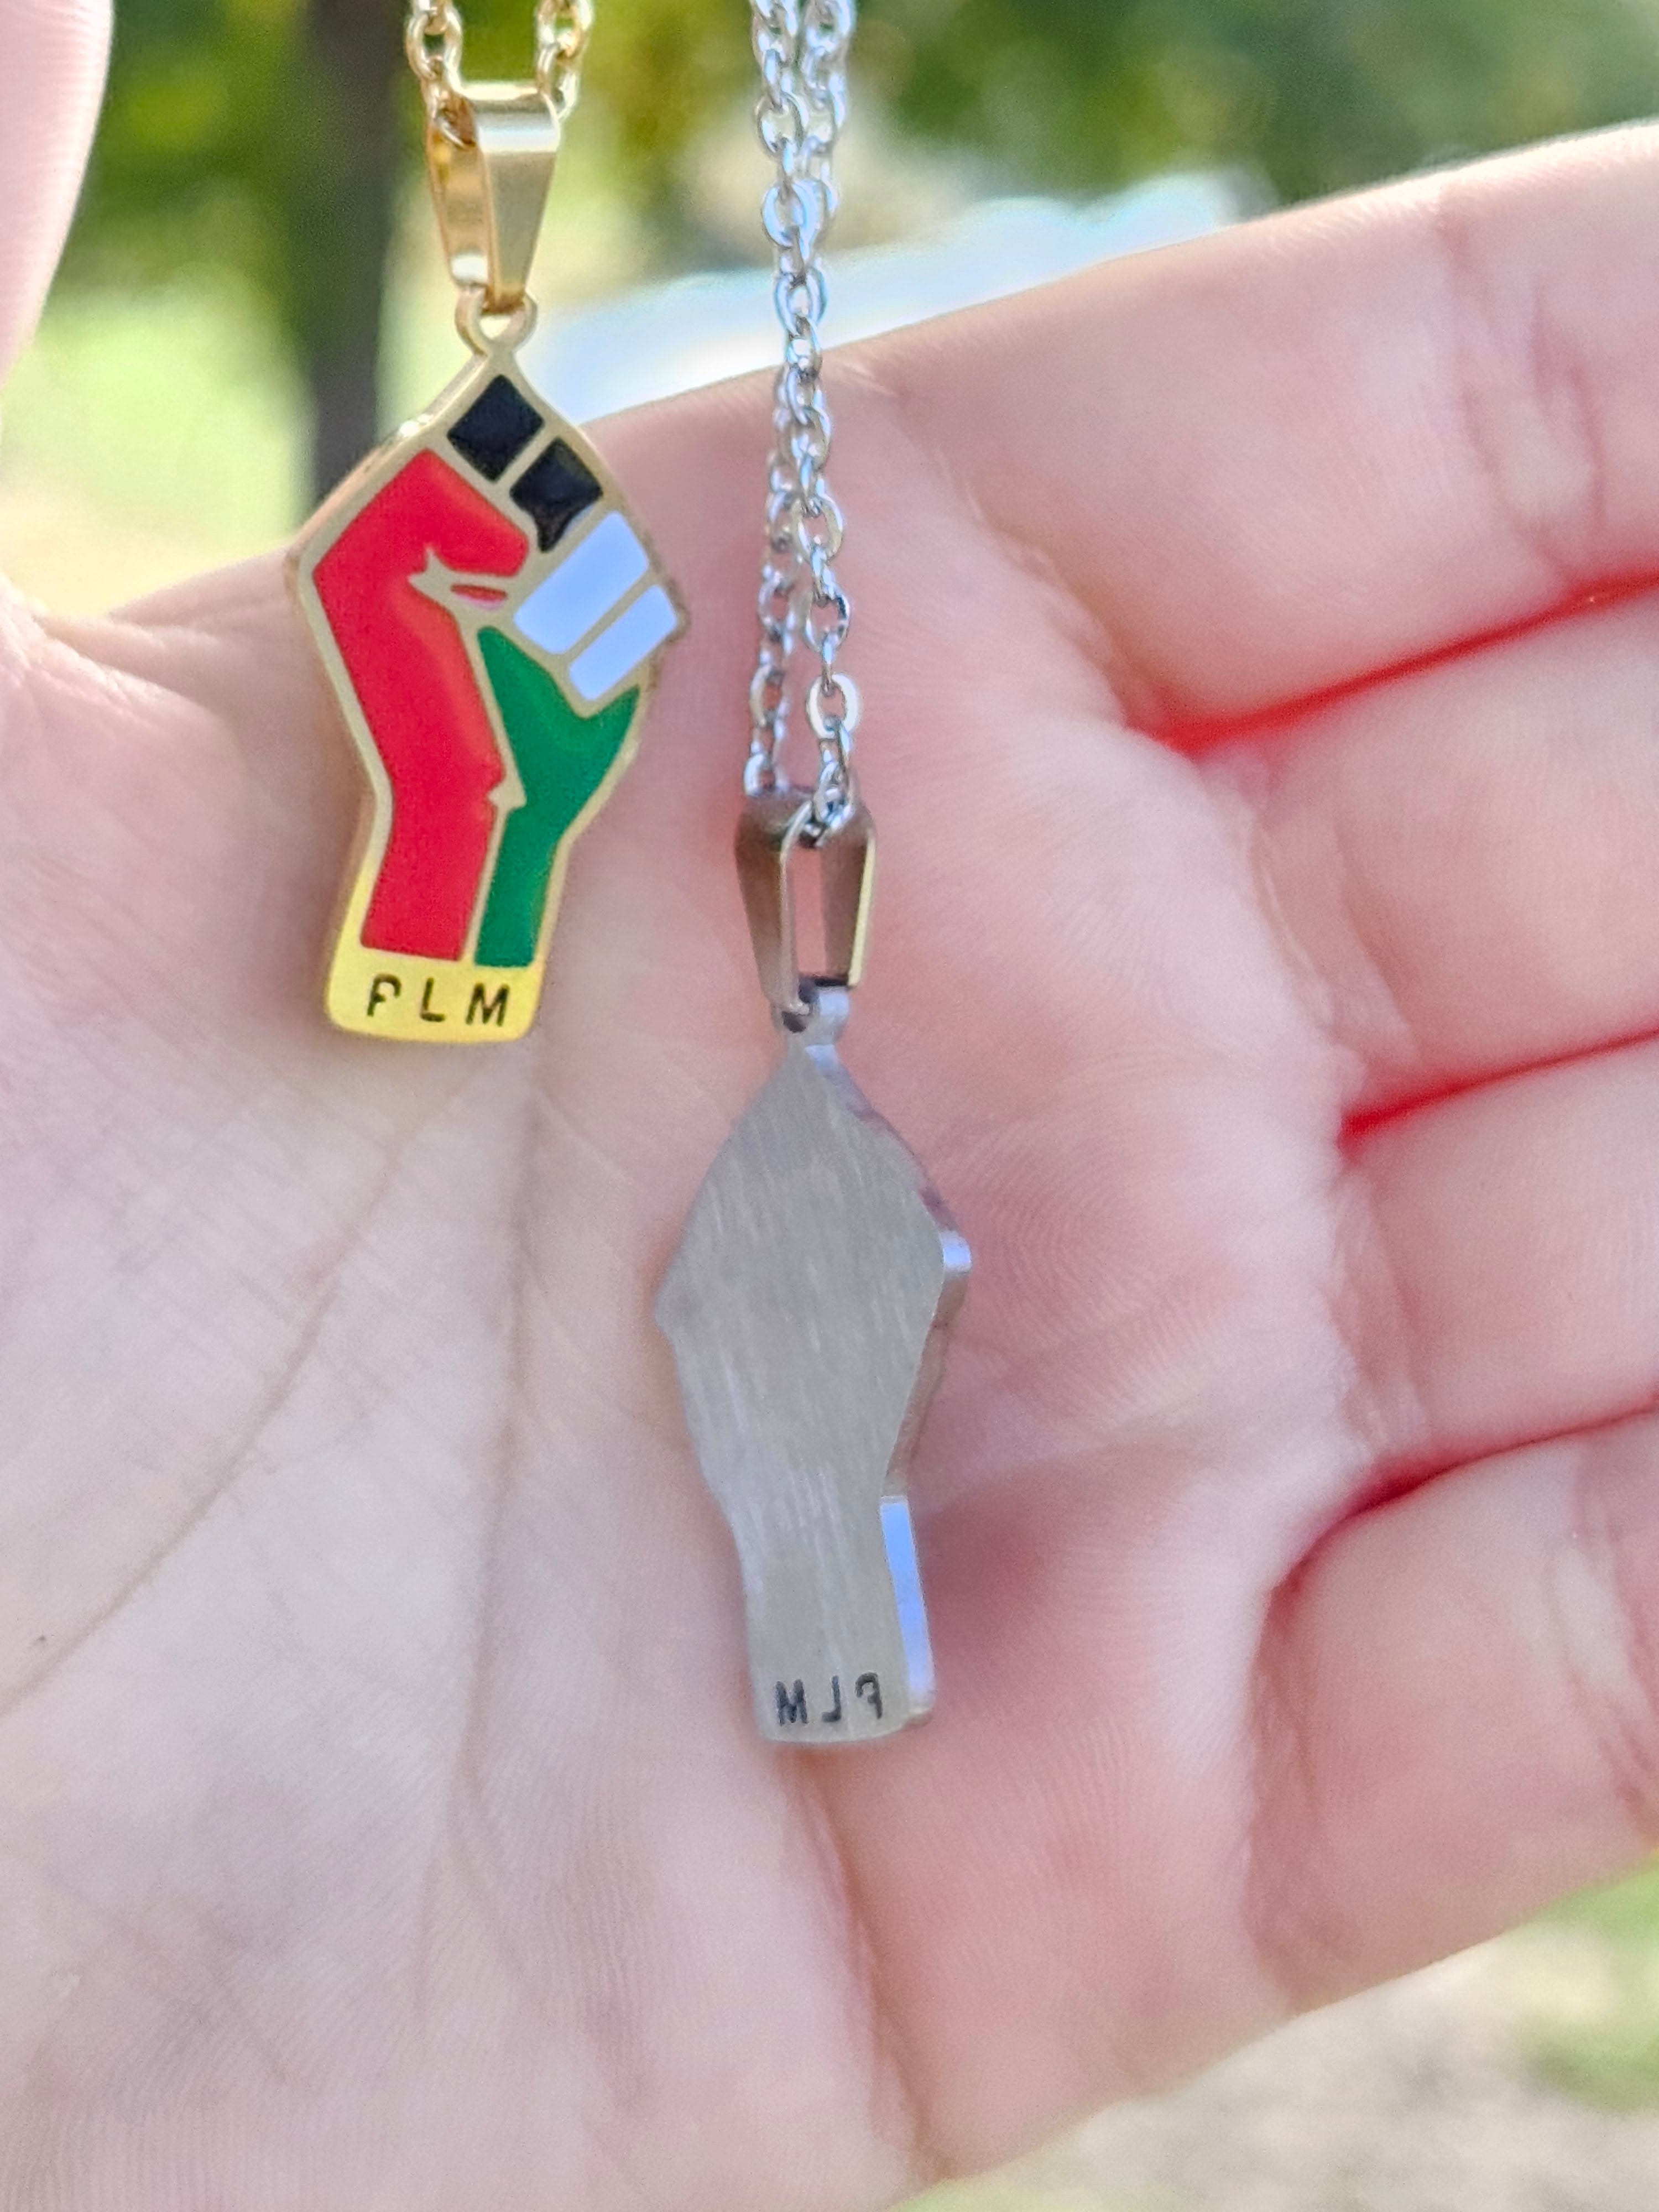 Palestine Fist PLM Pendent Necklace - Habibi Heritage